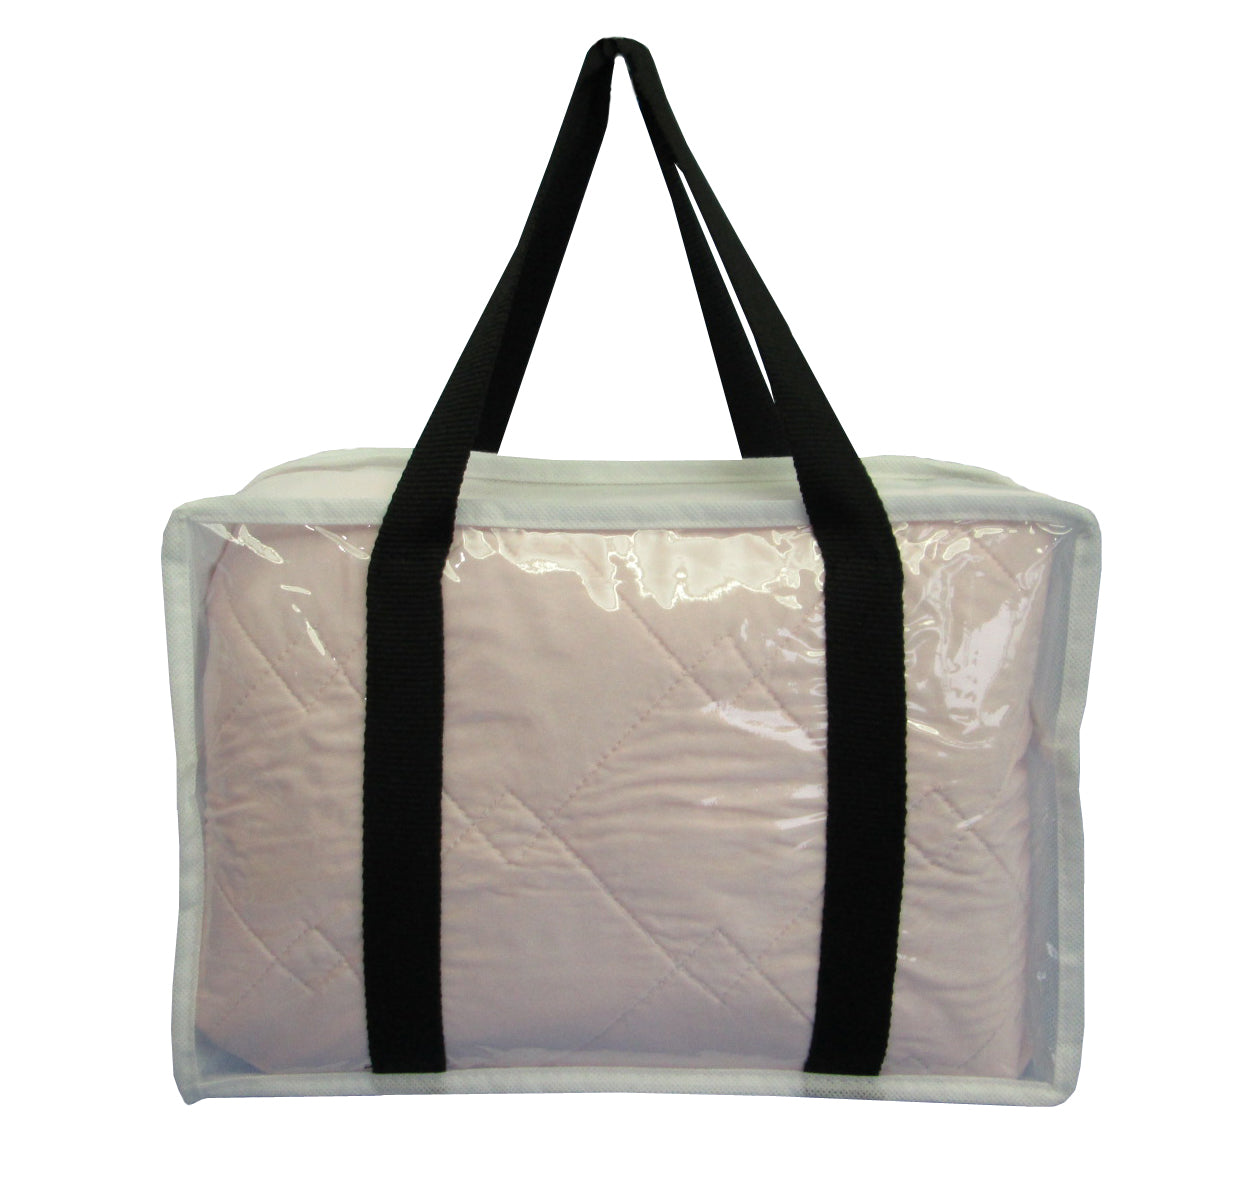 JLSB-0014 Sewn Bag